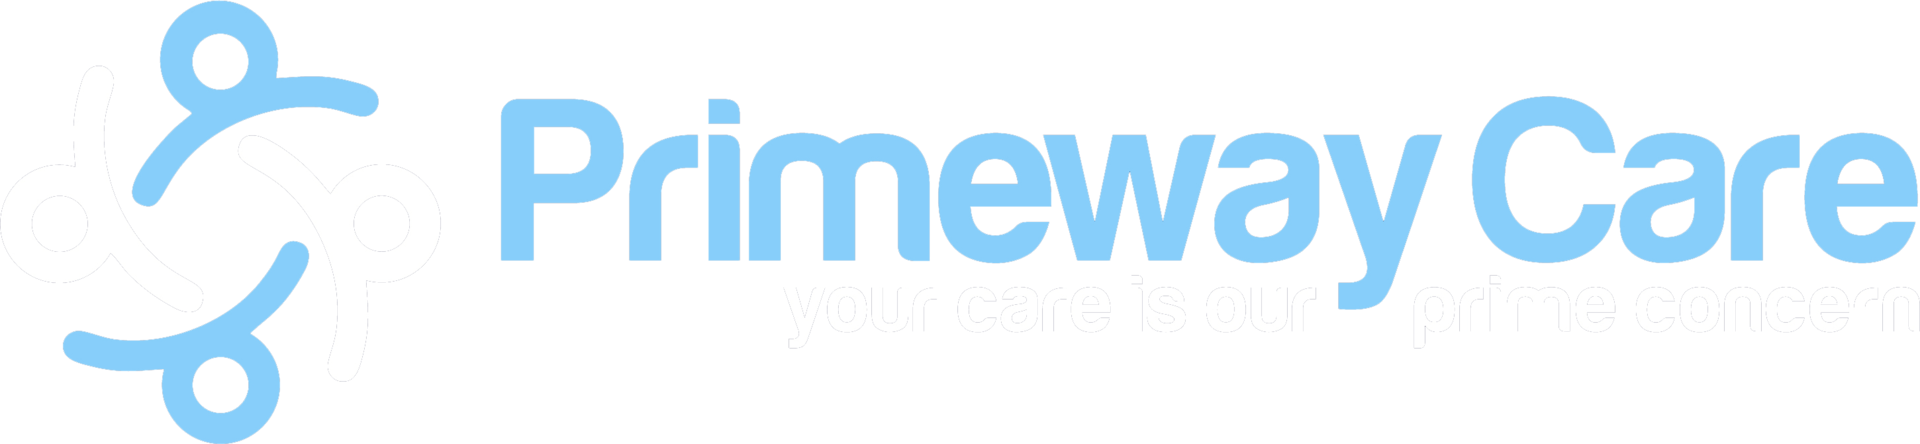 Primeway Care